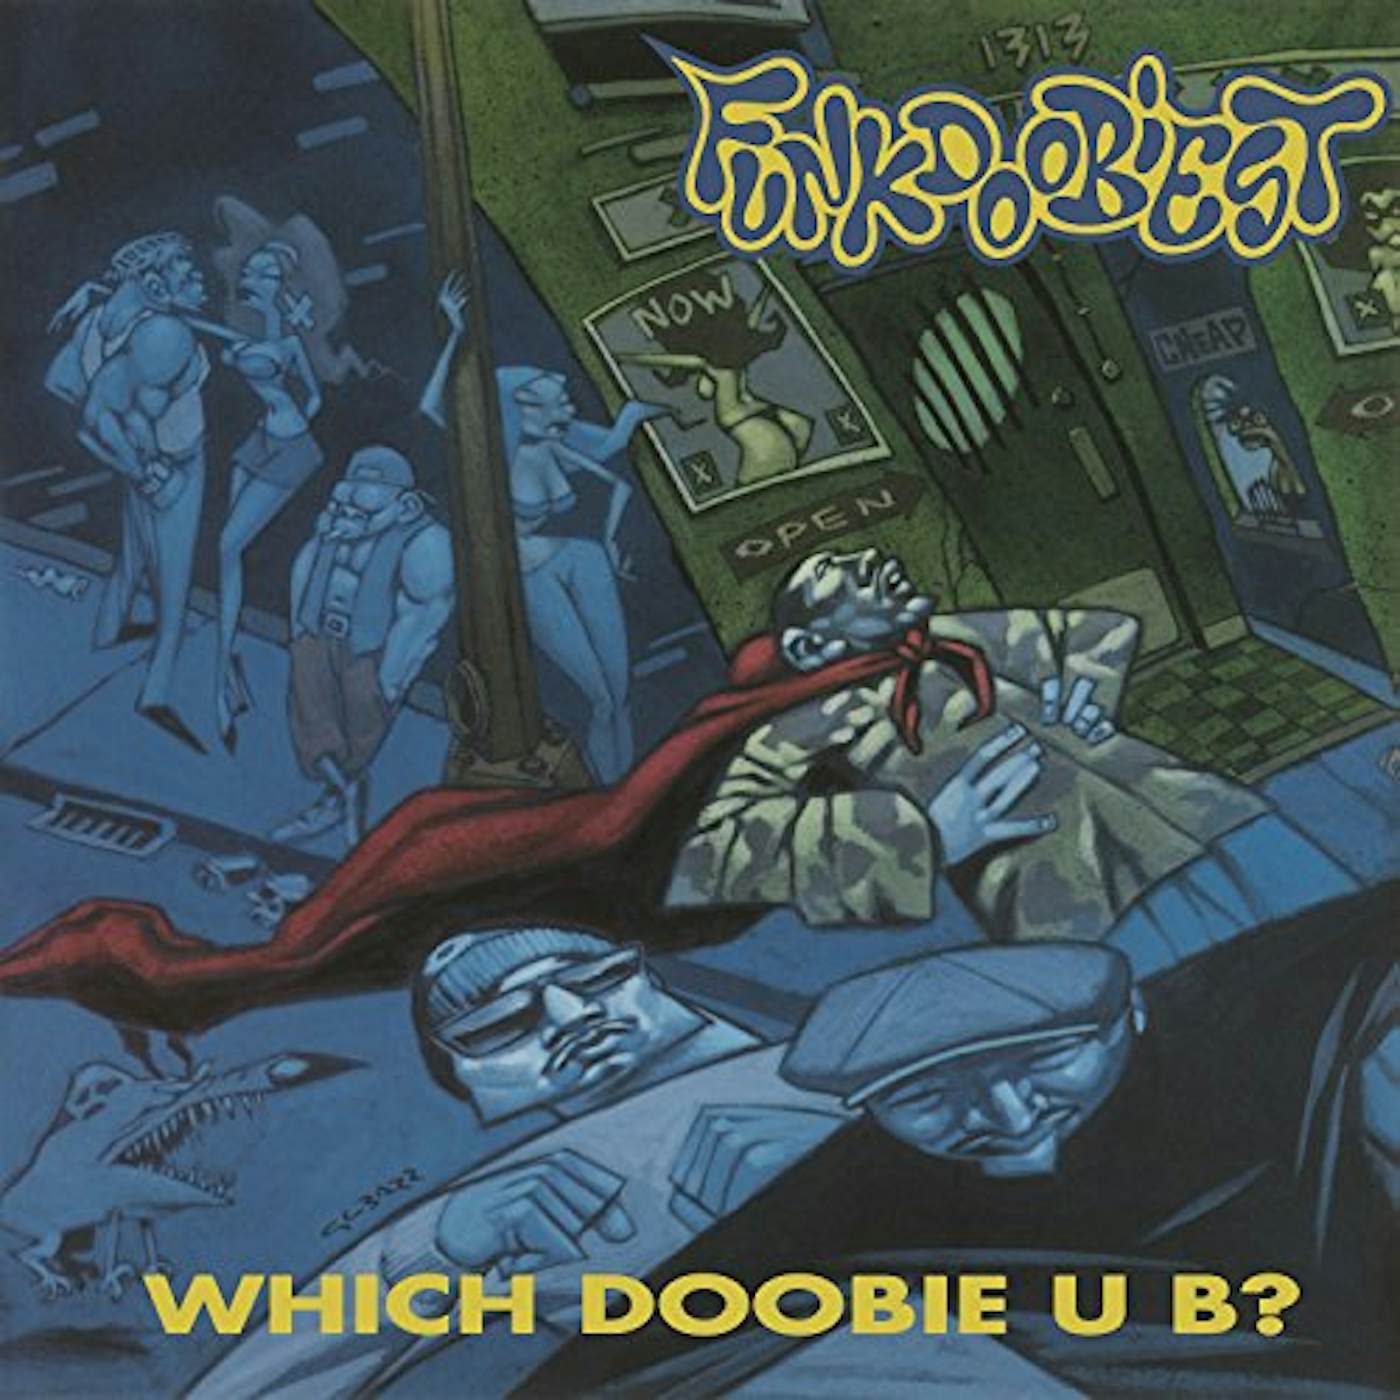 Funkdoobiest Which Doobie U B? Vinyl Record